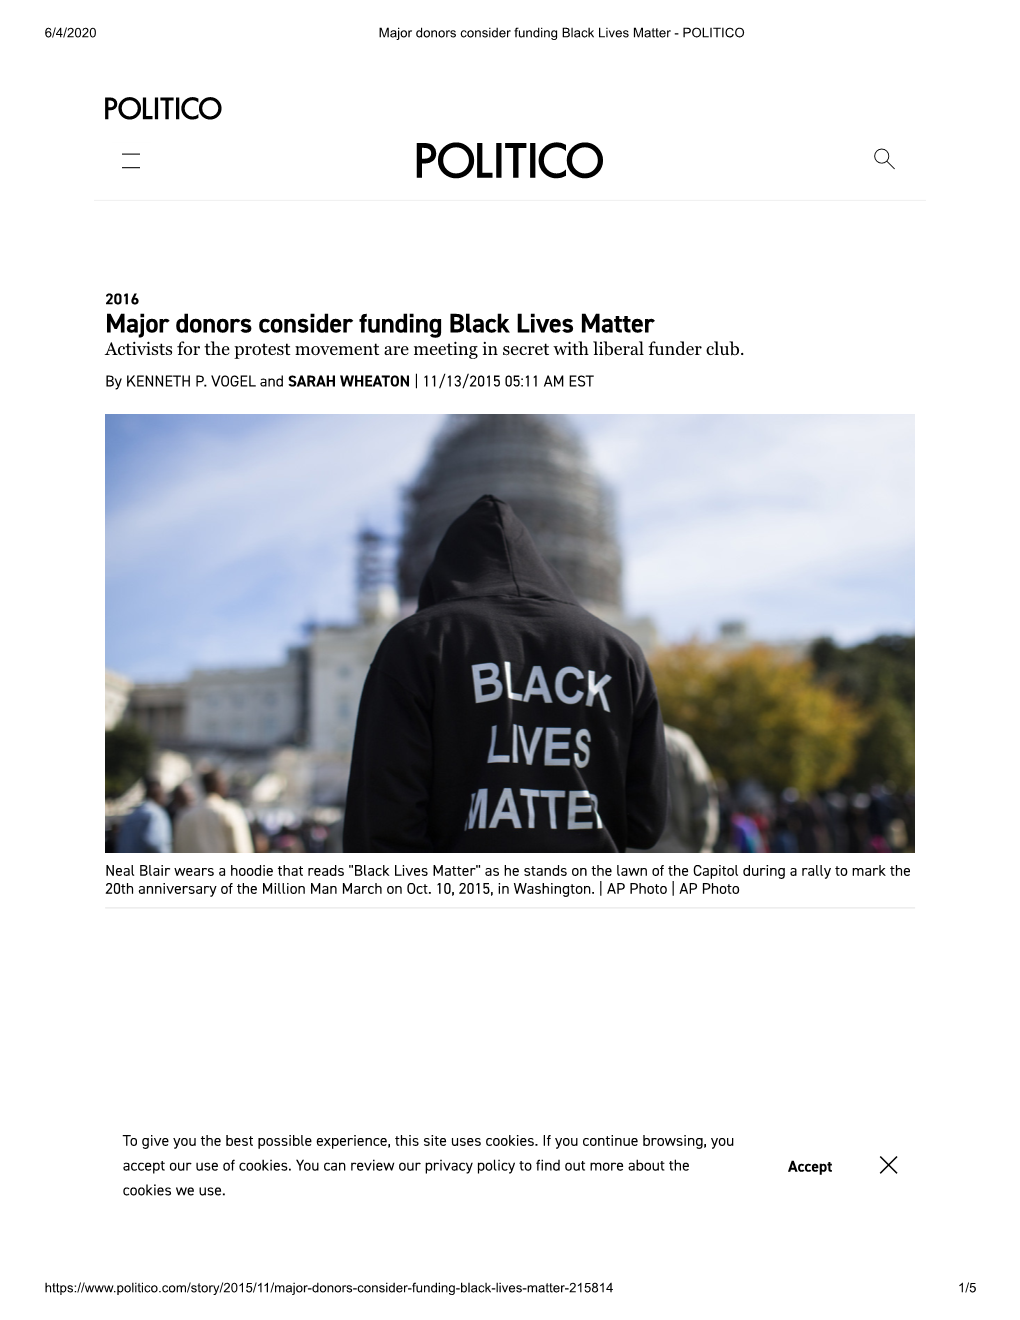 Major Donors Consider Funding Black Lives Matter - POLITICO